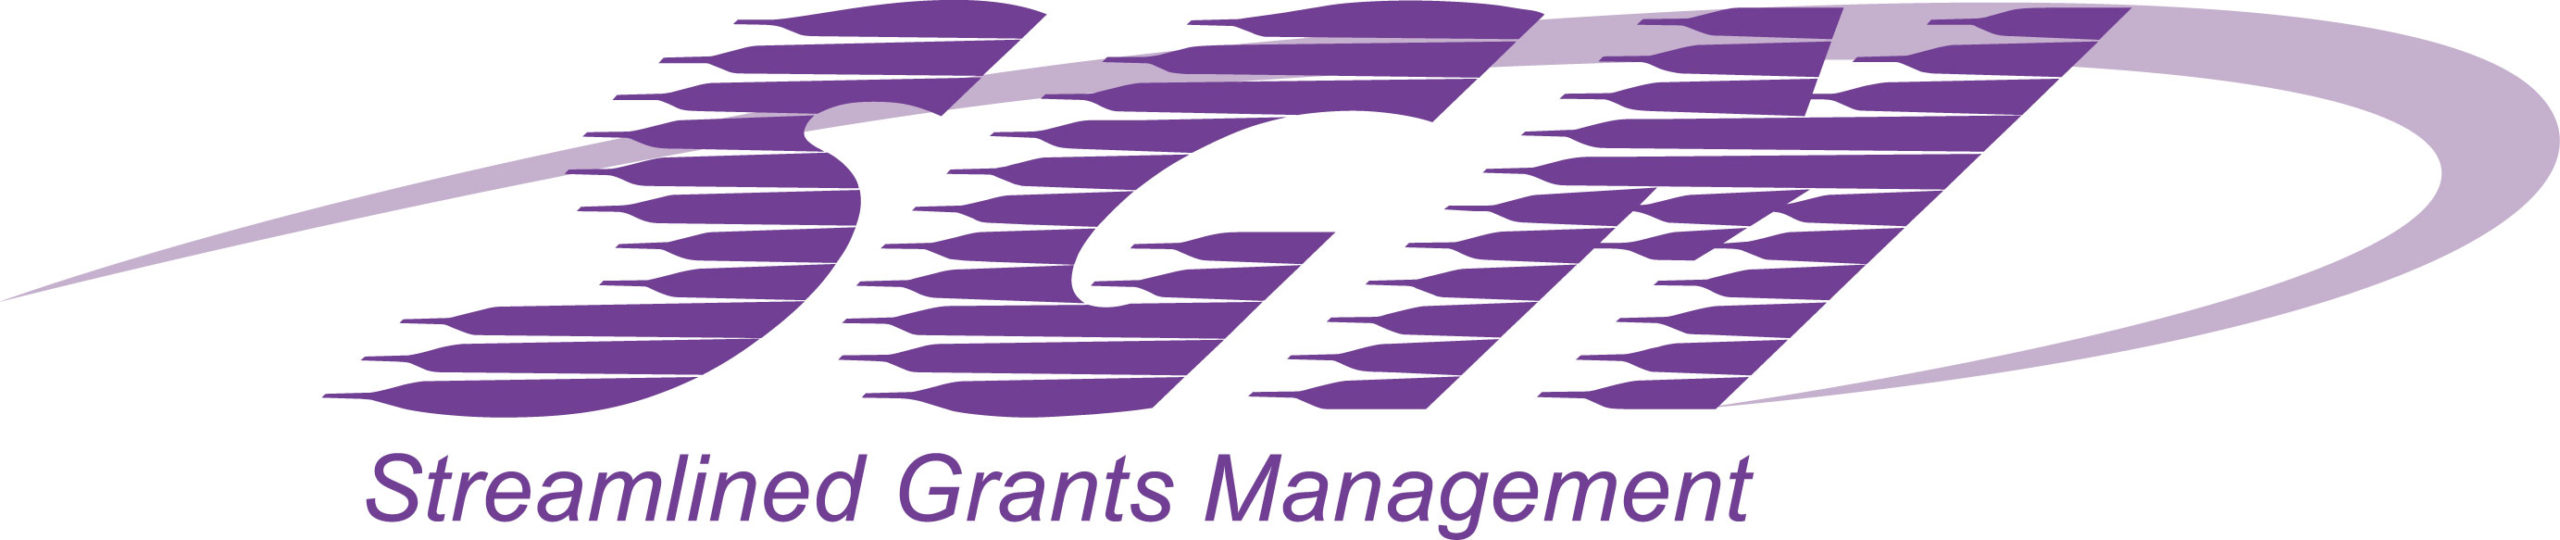 Streamlined Grants Management